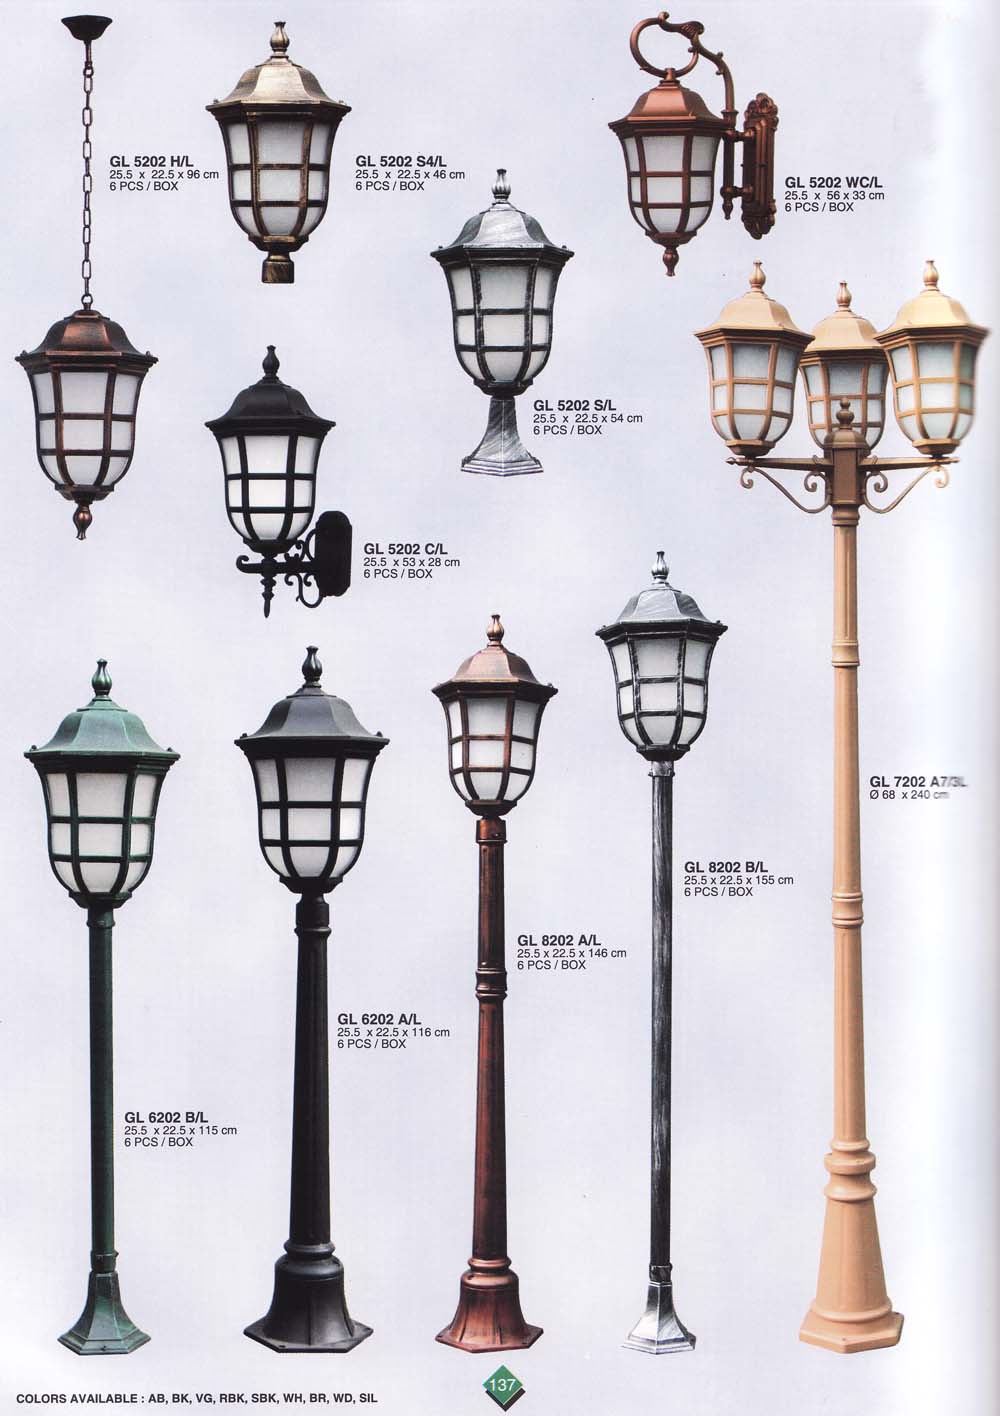 ABIYAN ART GALLERY: DESIGN LAMPU TAMAN